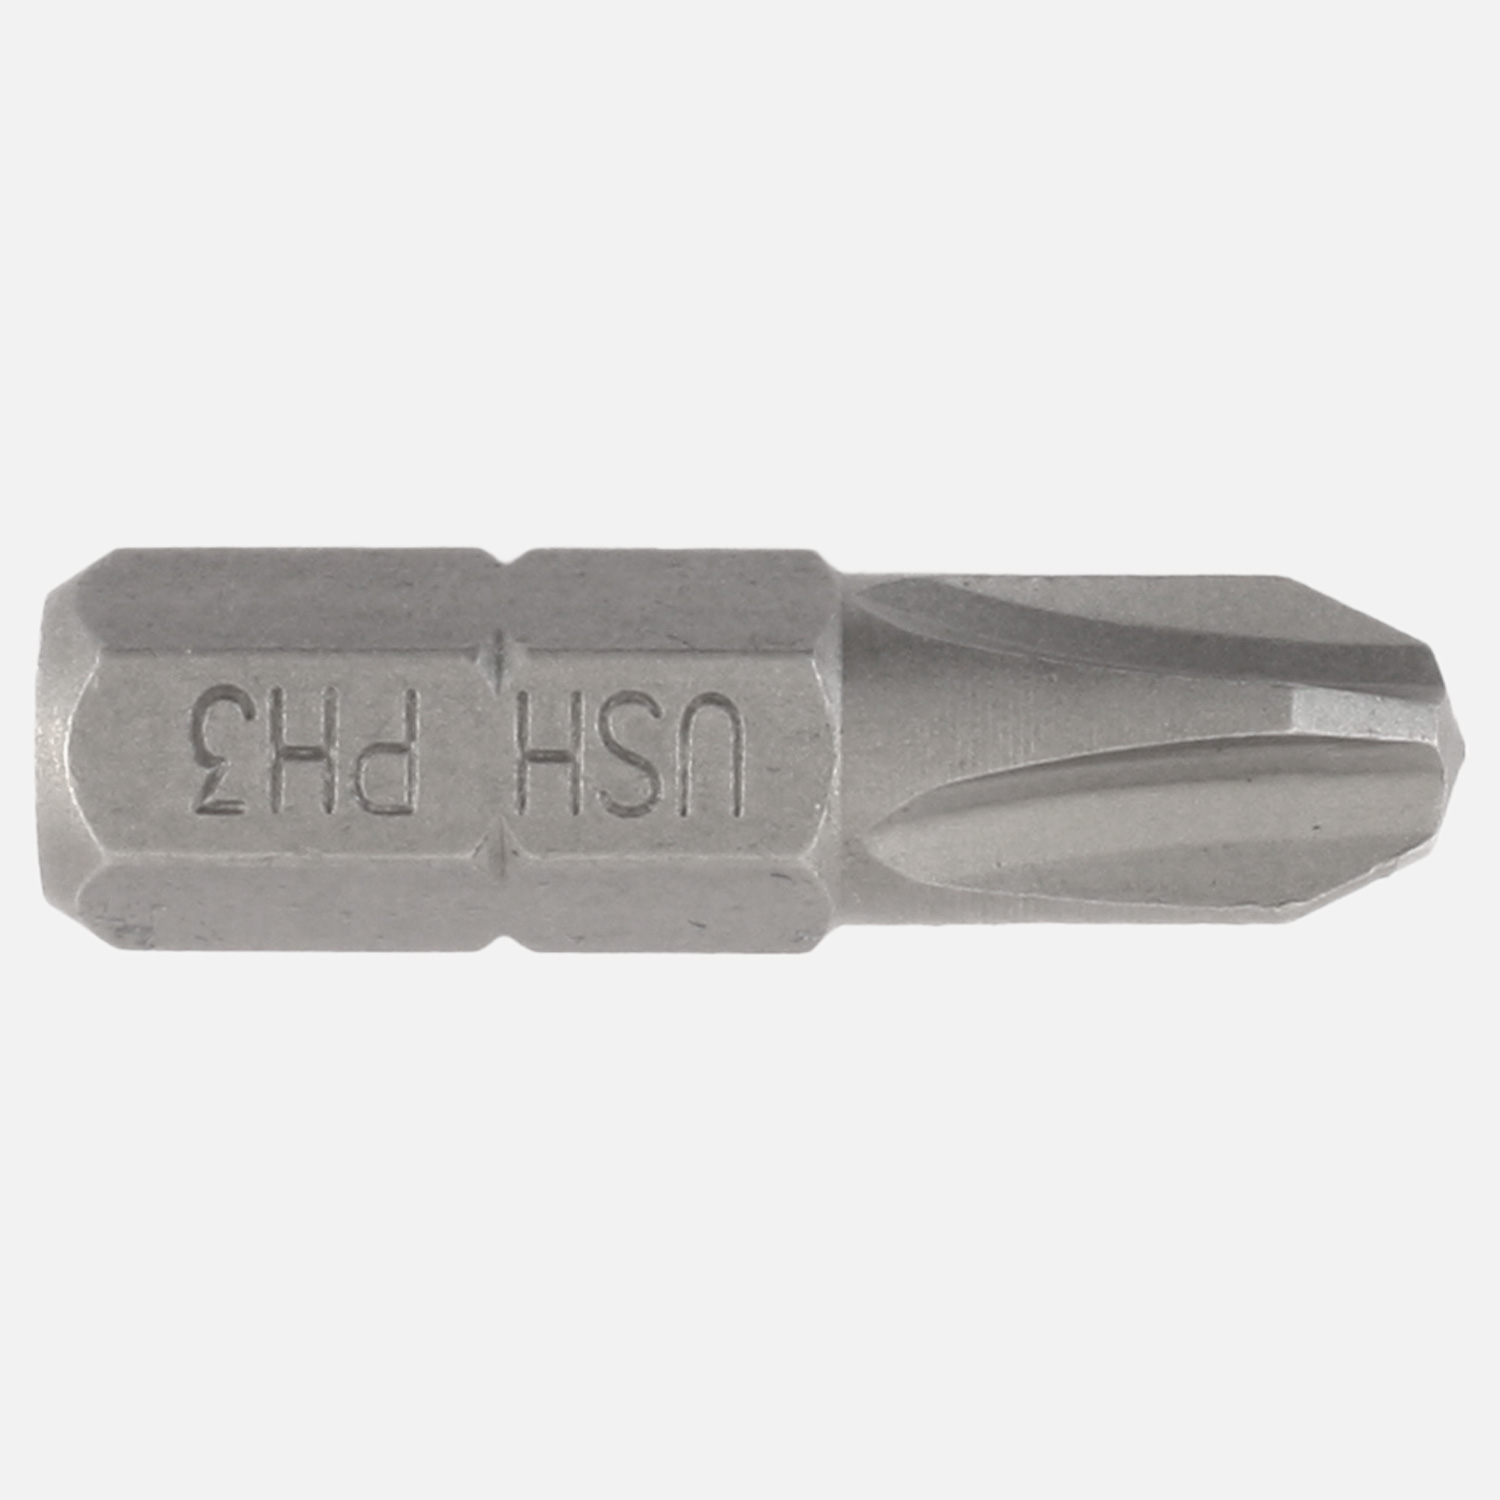 100 Phillips Bits - PH3 - 1/4 Zoll C 6,3 Hausmarke, Länge 25 mm